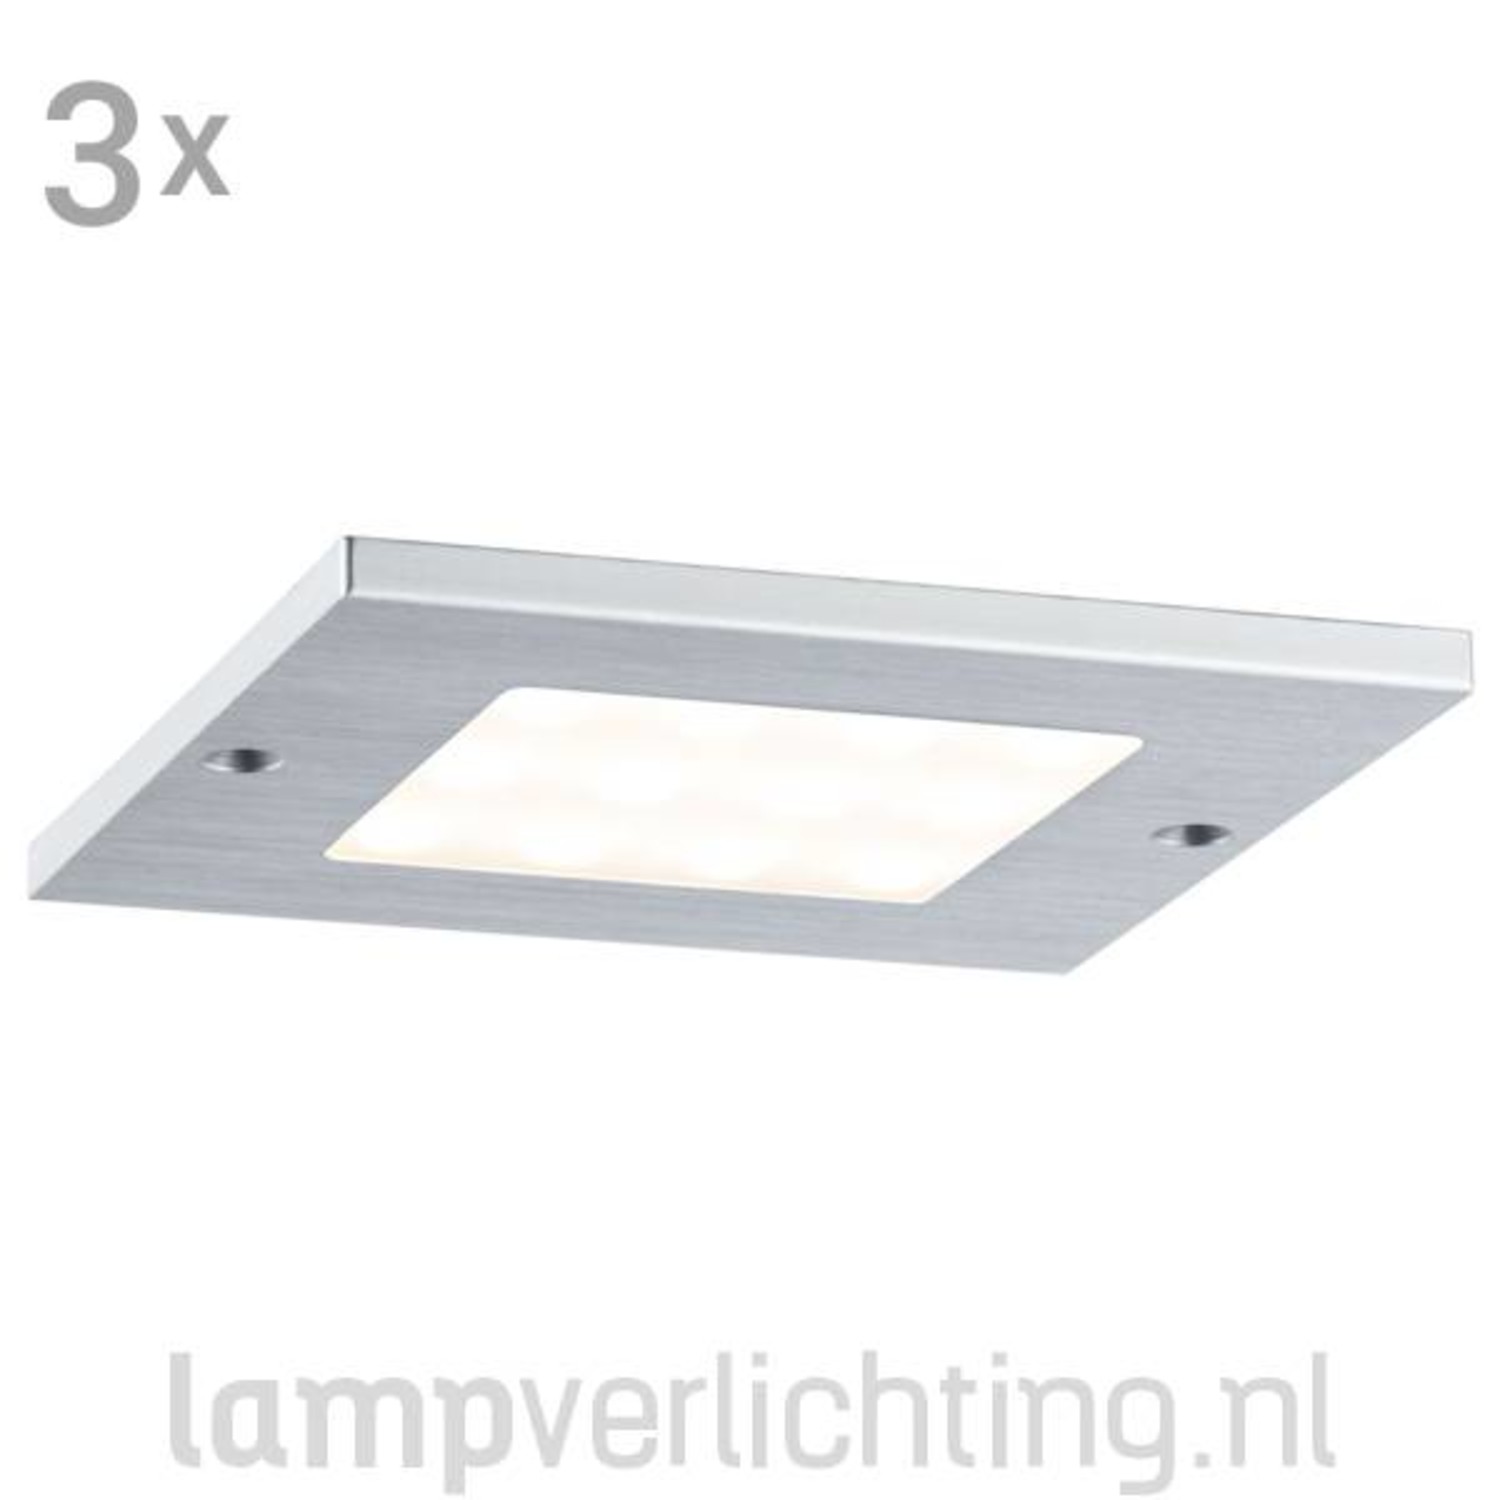 Verraad Franje trog Platte LED Opbouwspots Vierkant - Set van 3 - Slechts 4 mm dikke spots -  LampVerlichting.nl